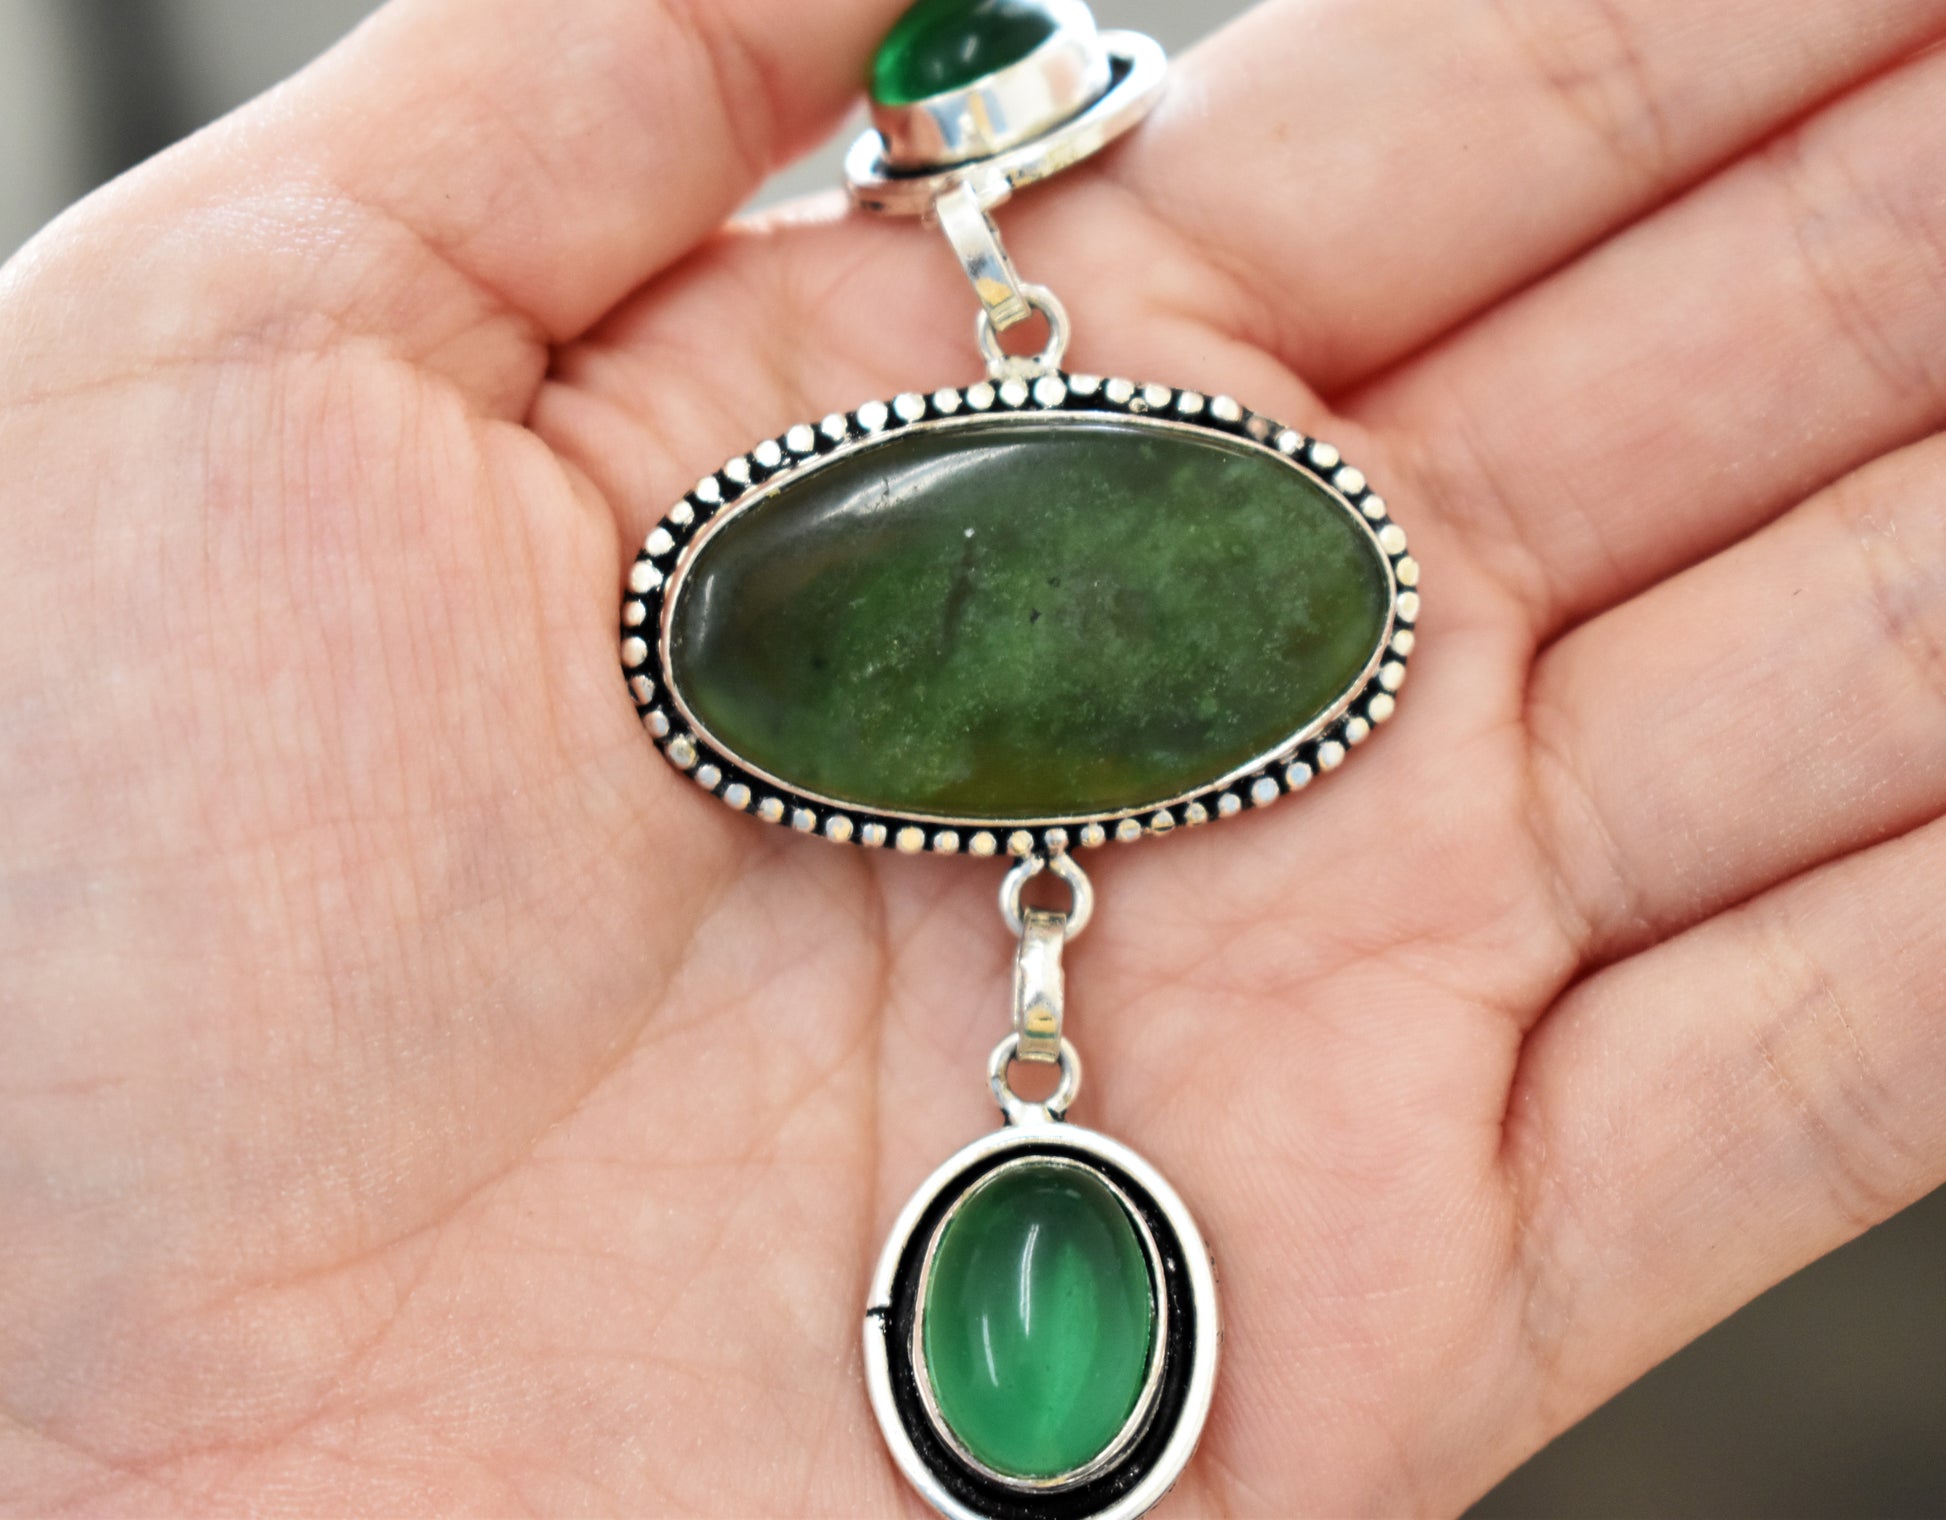 stones-of-transformation - Prehnite and Green Quartz Bracelet - Stones of Transformation - 